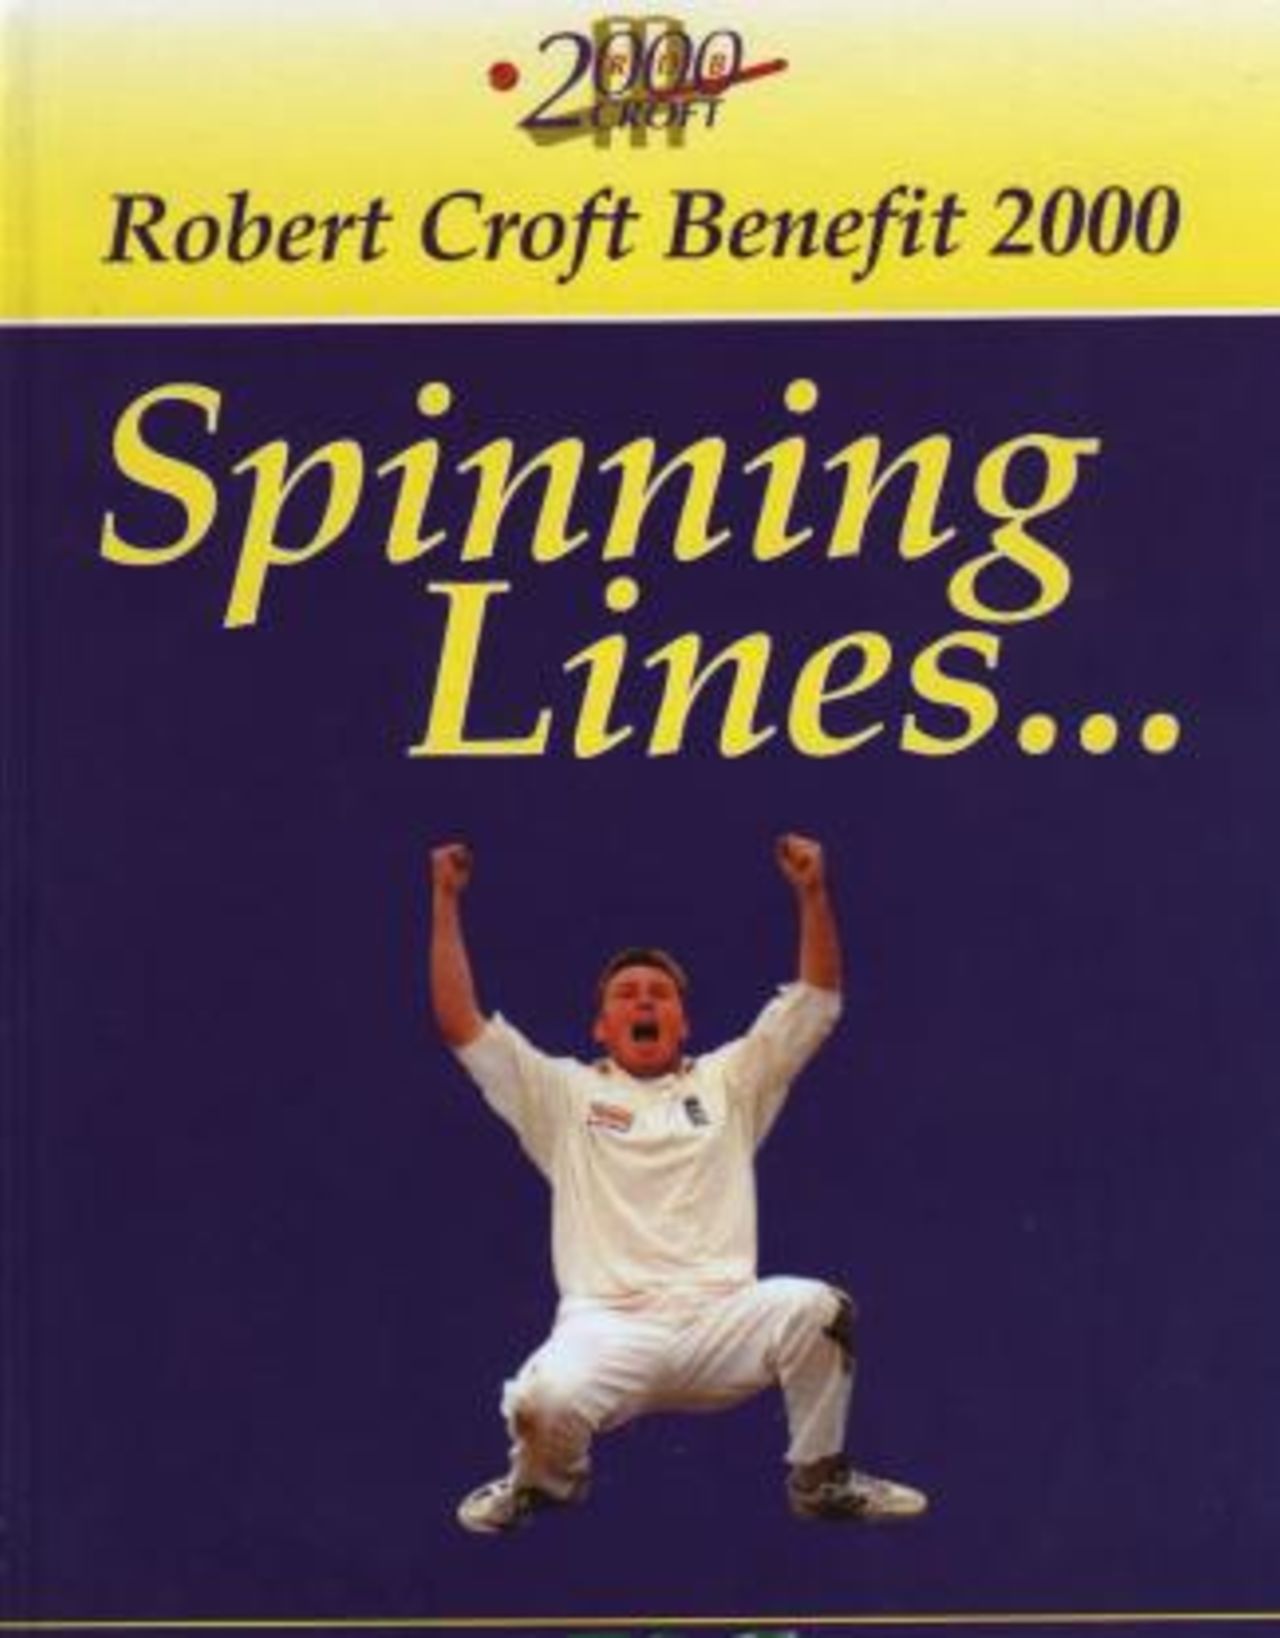 Robert Croft Benefit Cover